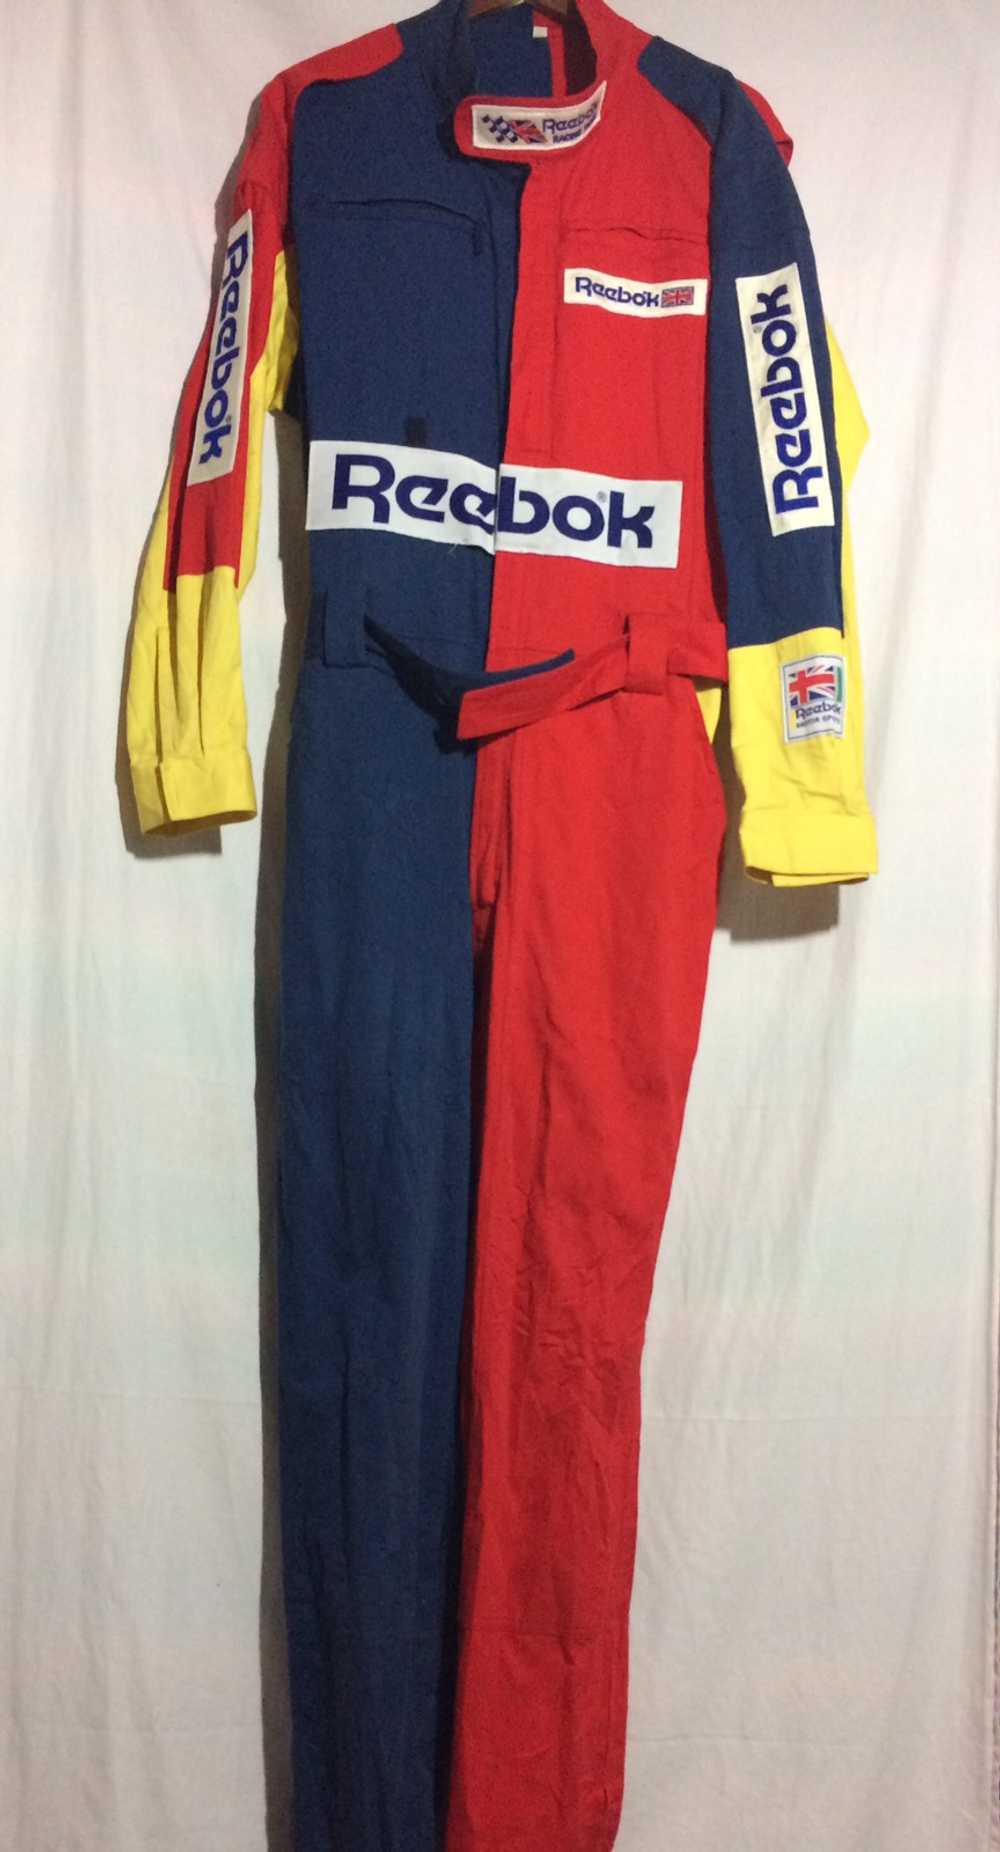 Sports Specialties - Vintage Reebok Racing Team - image 1